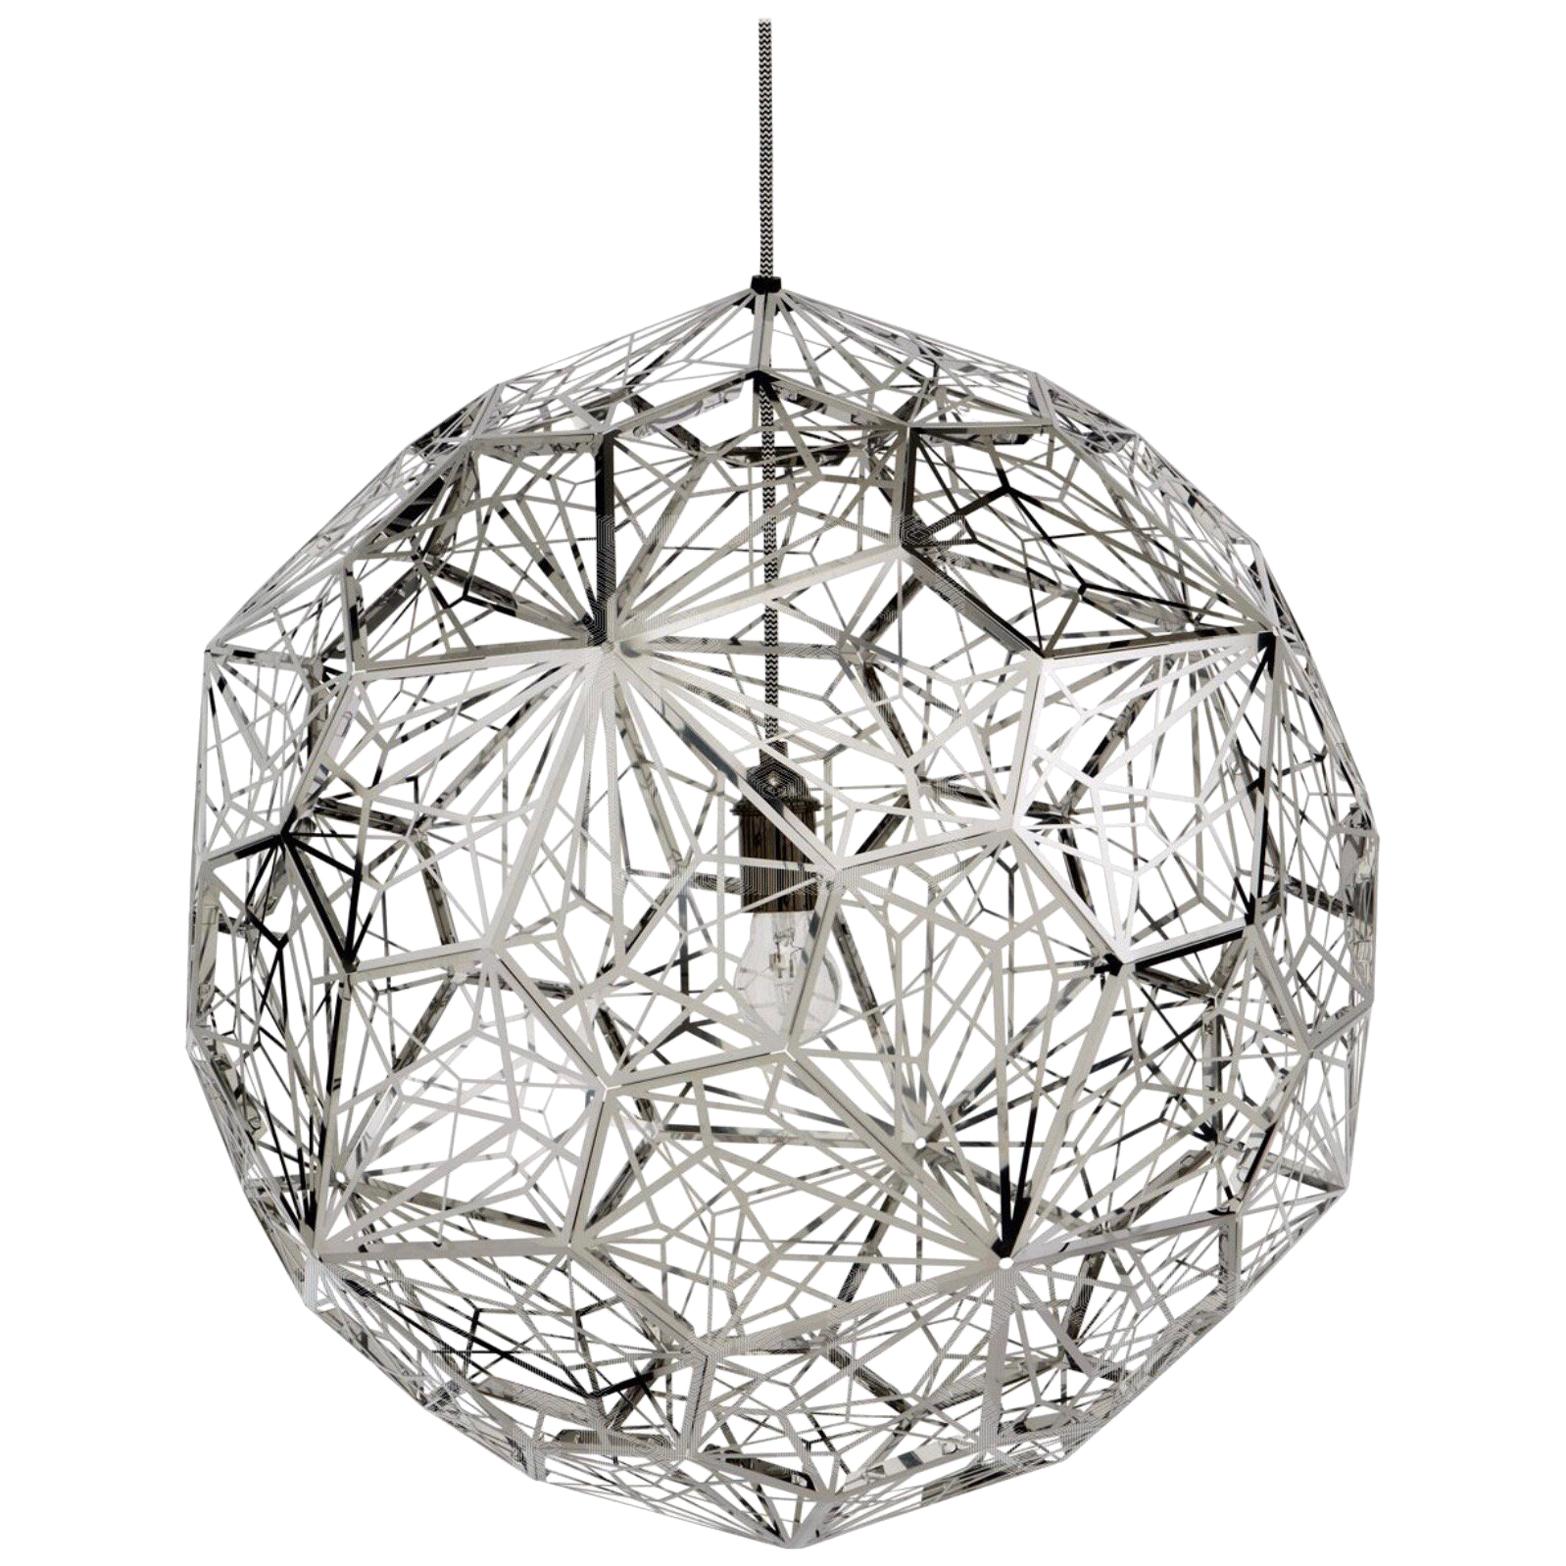 Tom Dixon Minimal Steel Etch Web Spherical Pendant, Industrial Contemporary